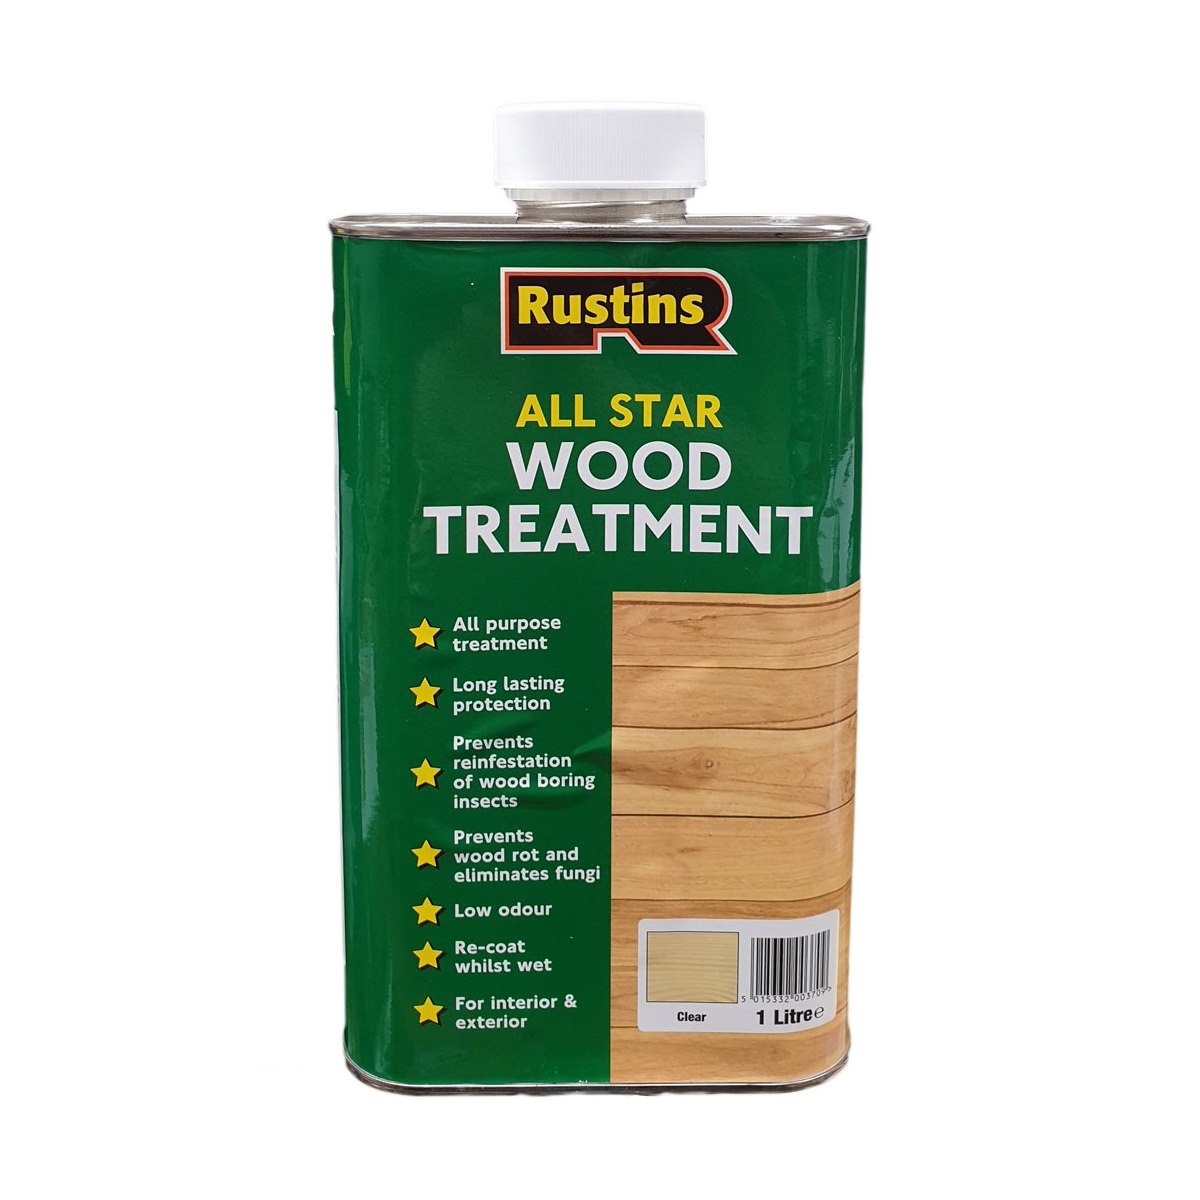 Rustins All Star Wood Treatment Clear 1 Litre